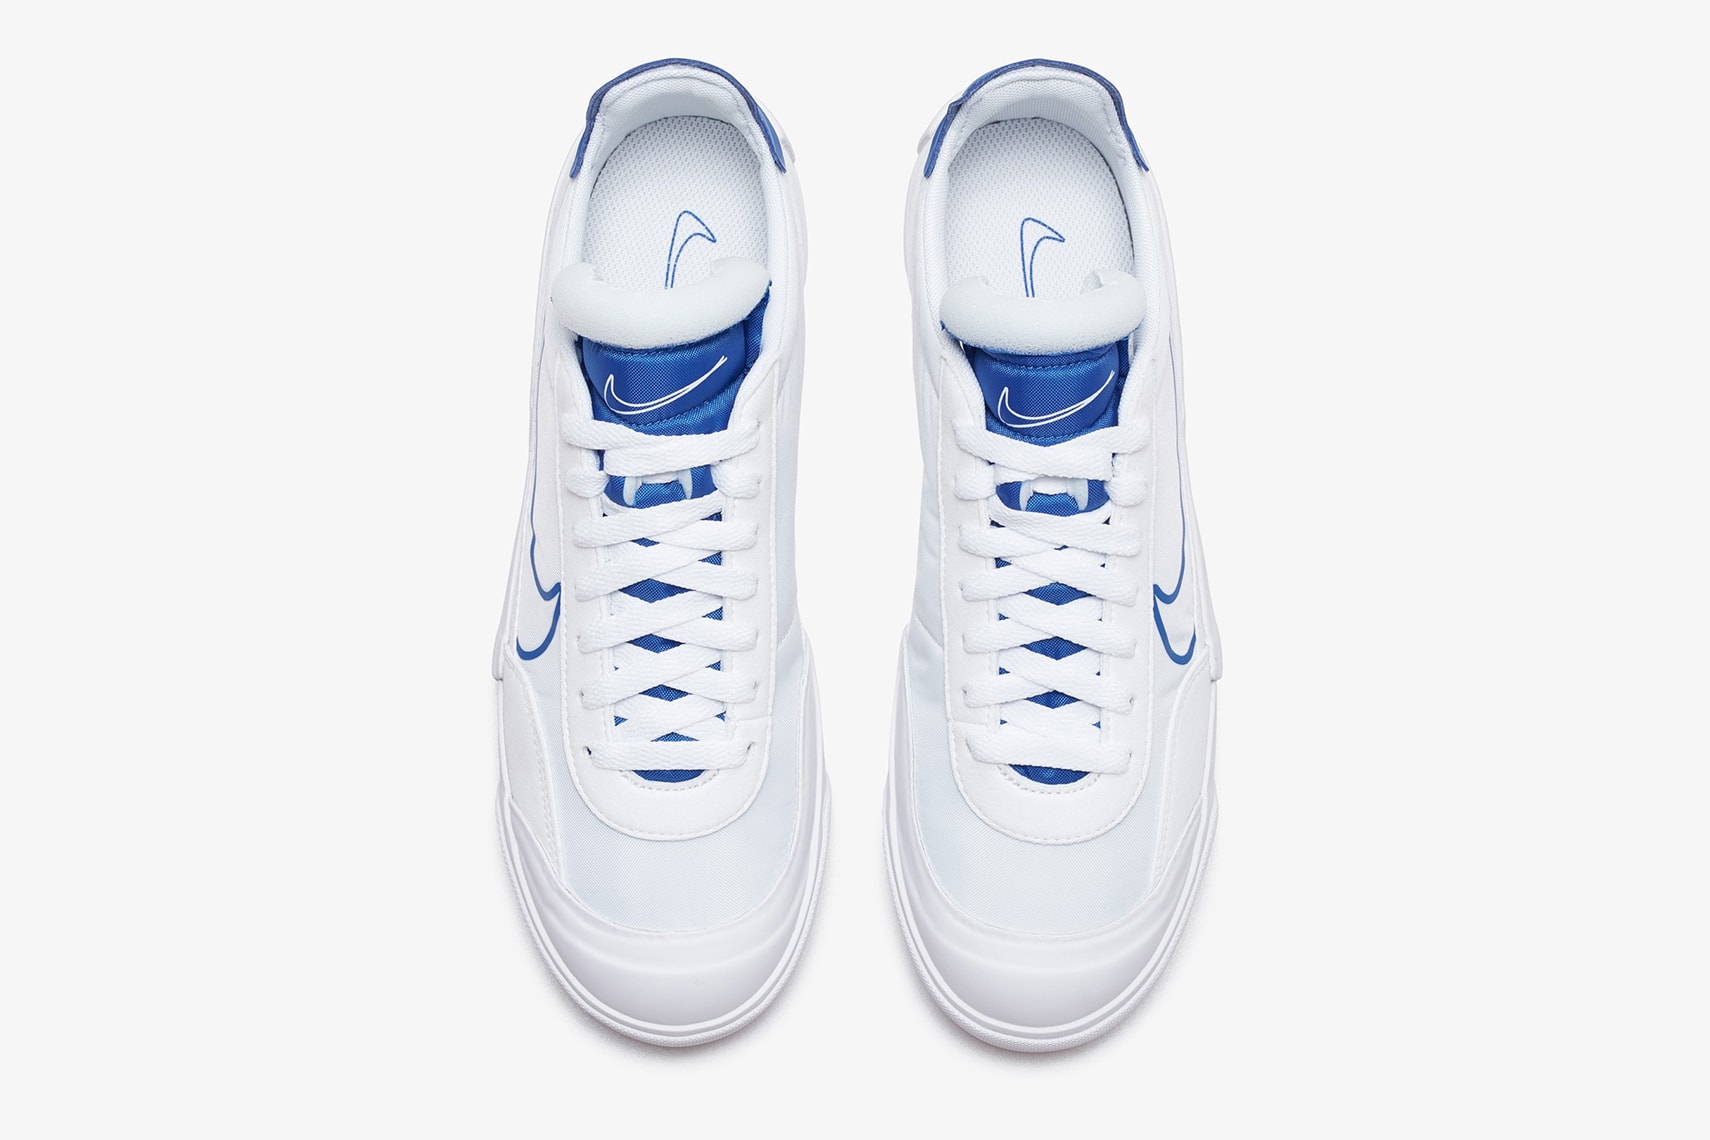 Nike Drop-Type LX 鞋款迎來簡潔藍白配色